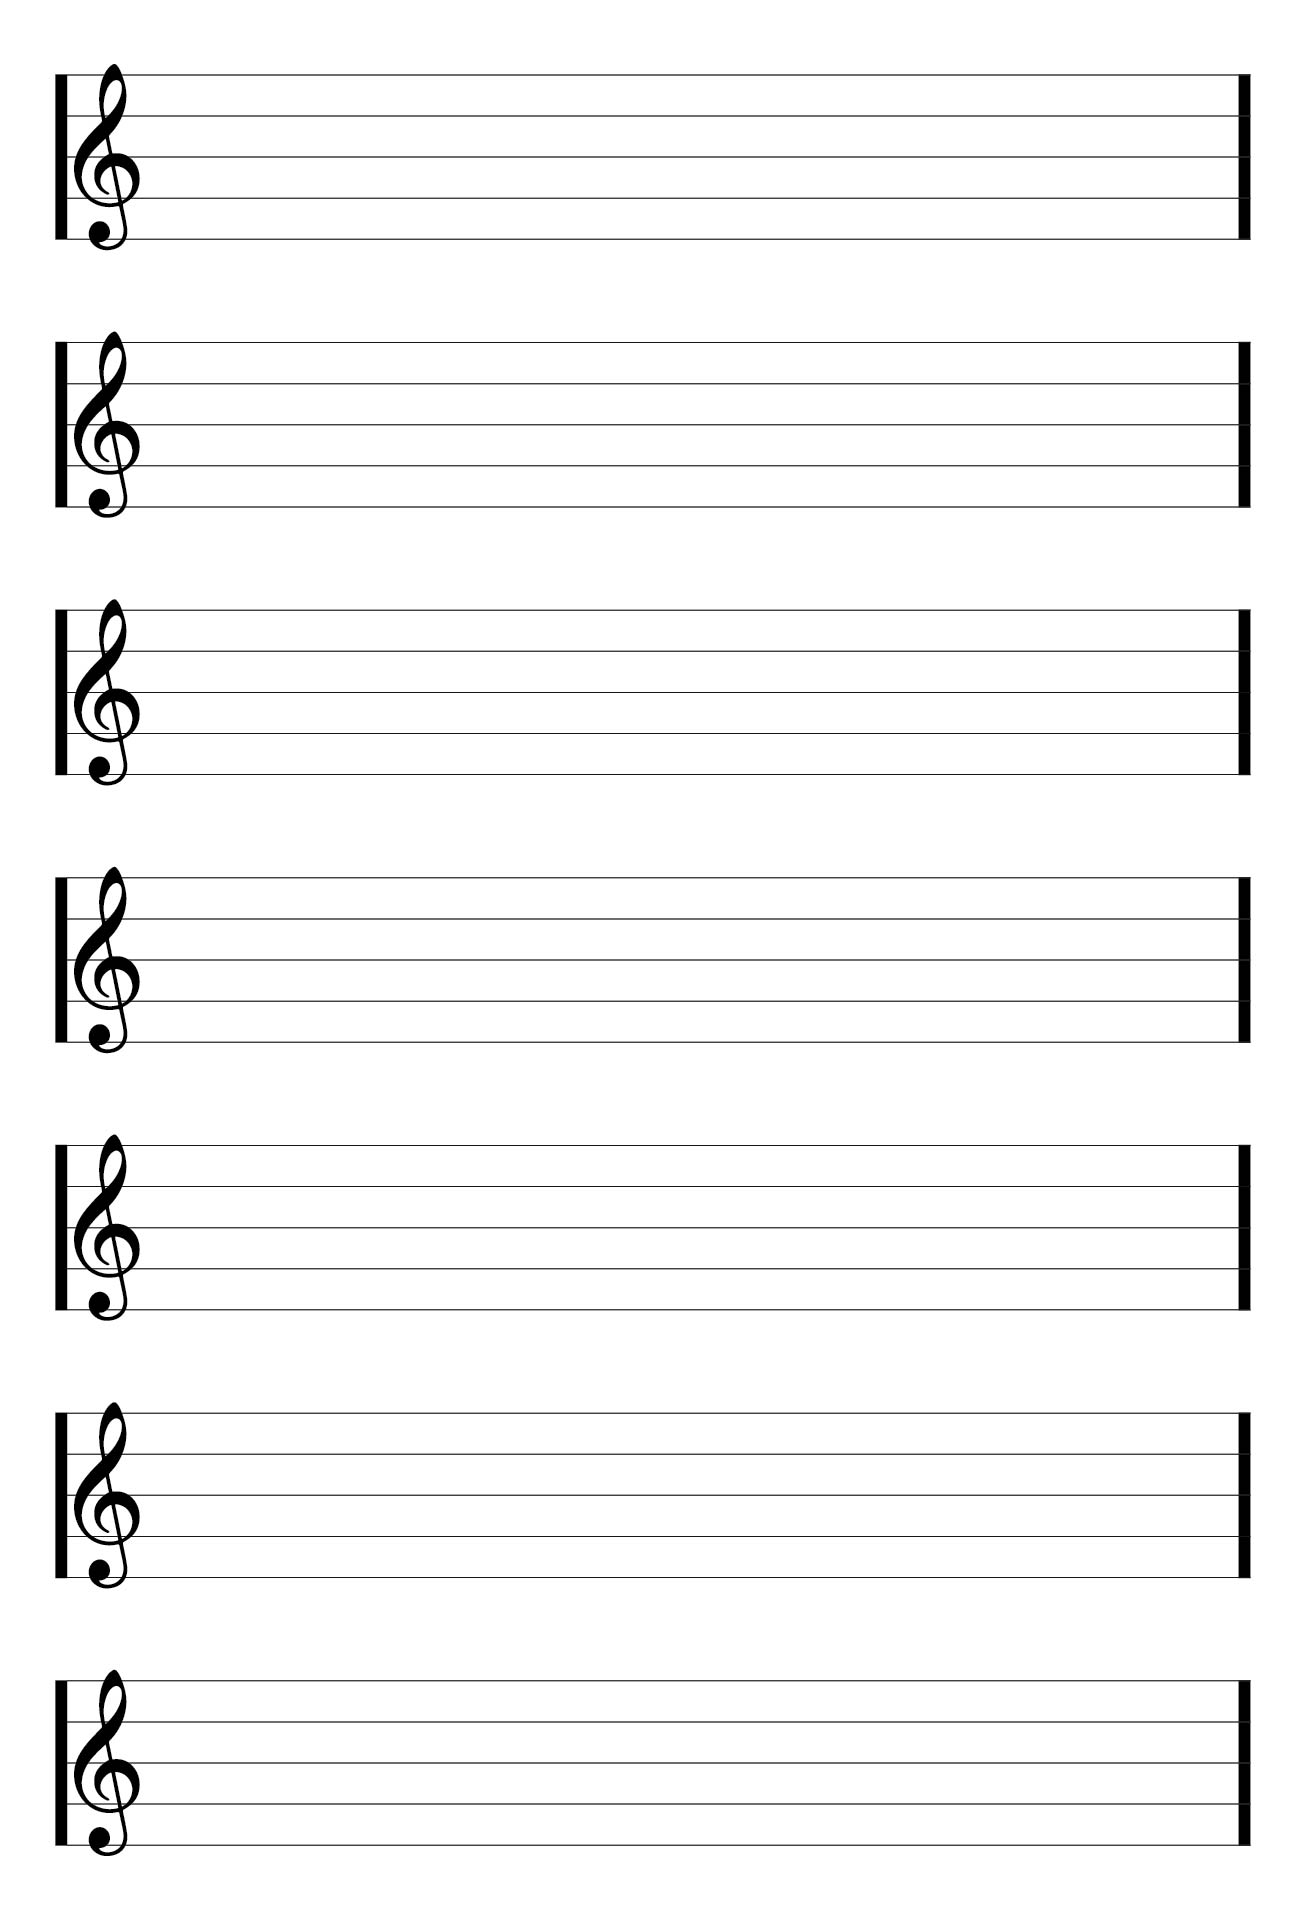 Printable Blank Music Staff Paper